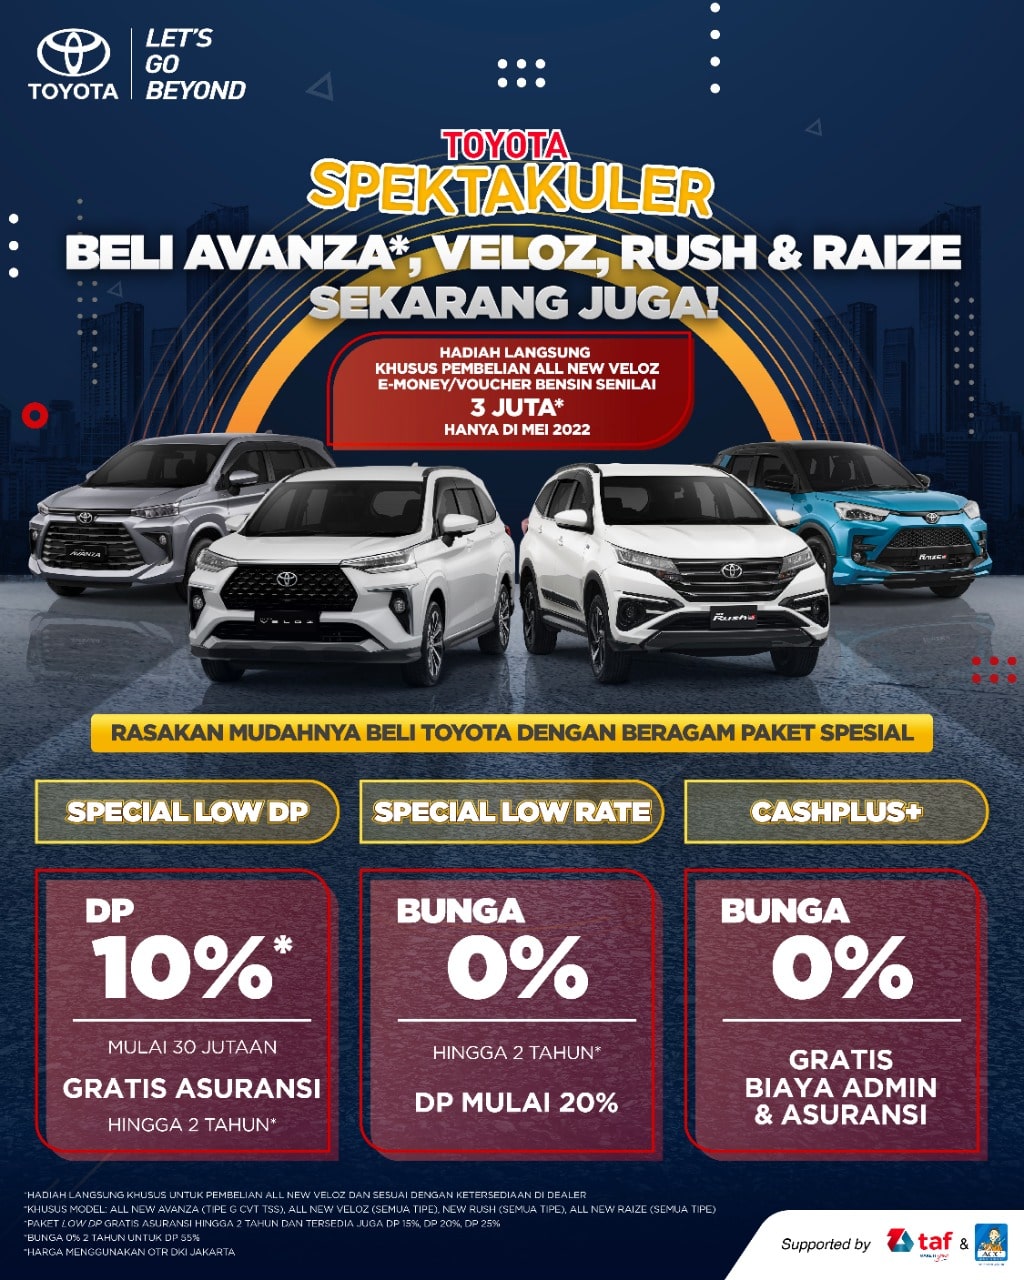 Promo Toyota Spektakuler - Promo Toyota Bandung